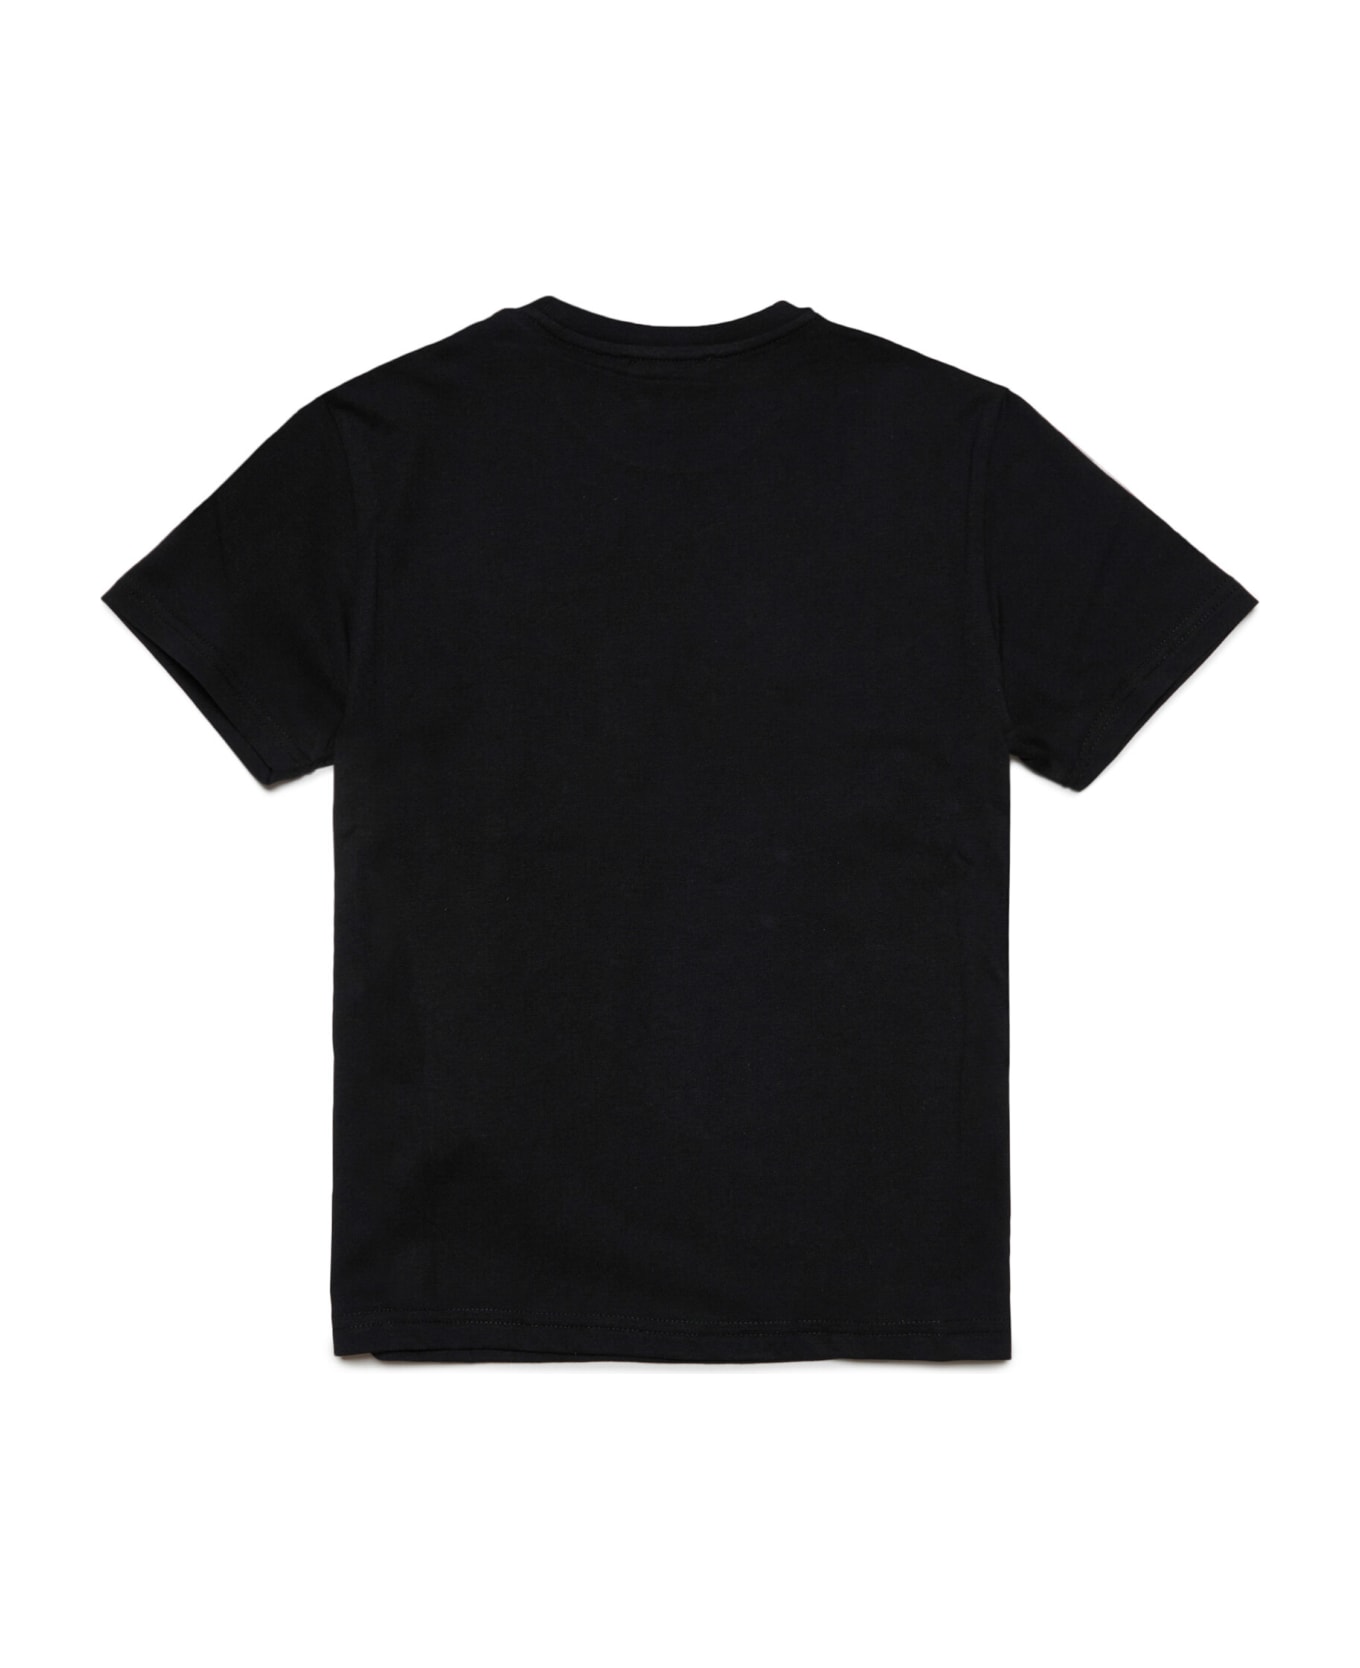 Dsquared2 D2t971u Relax-eco T-shirt Dsquared Organic Cotton Jersey Crewneck T-shirt With Logo - black